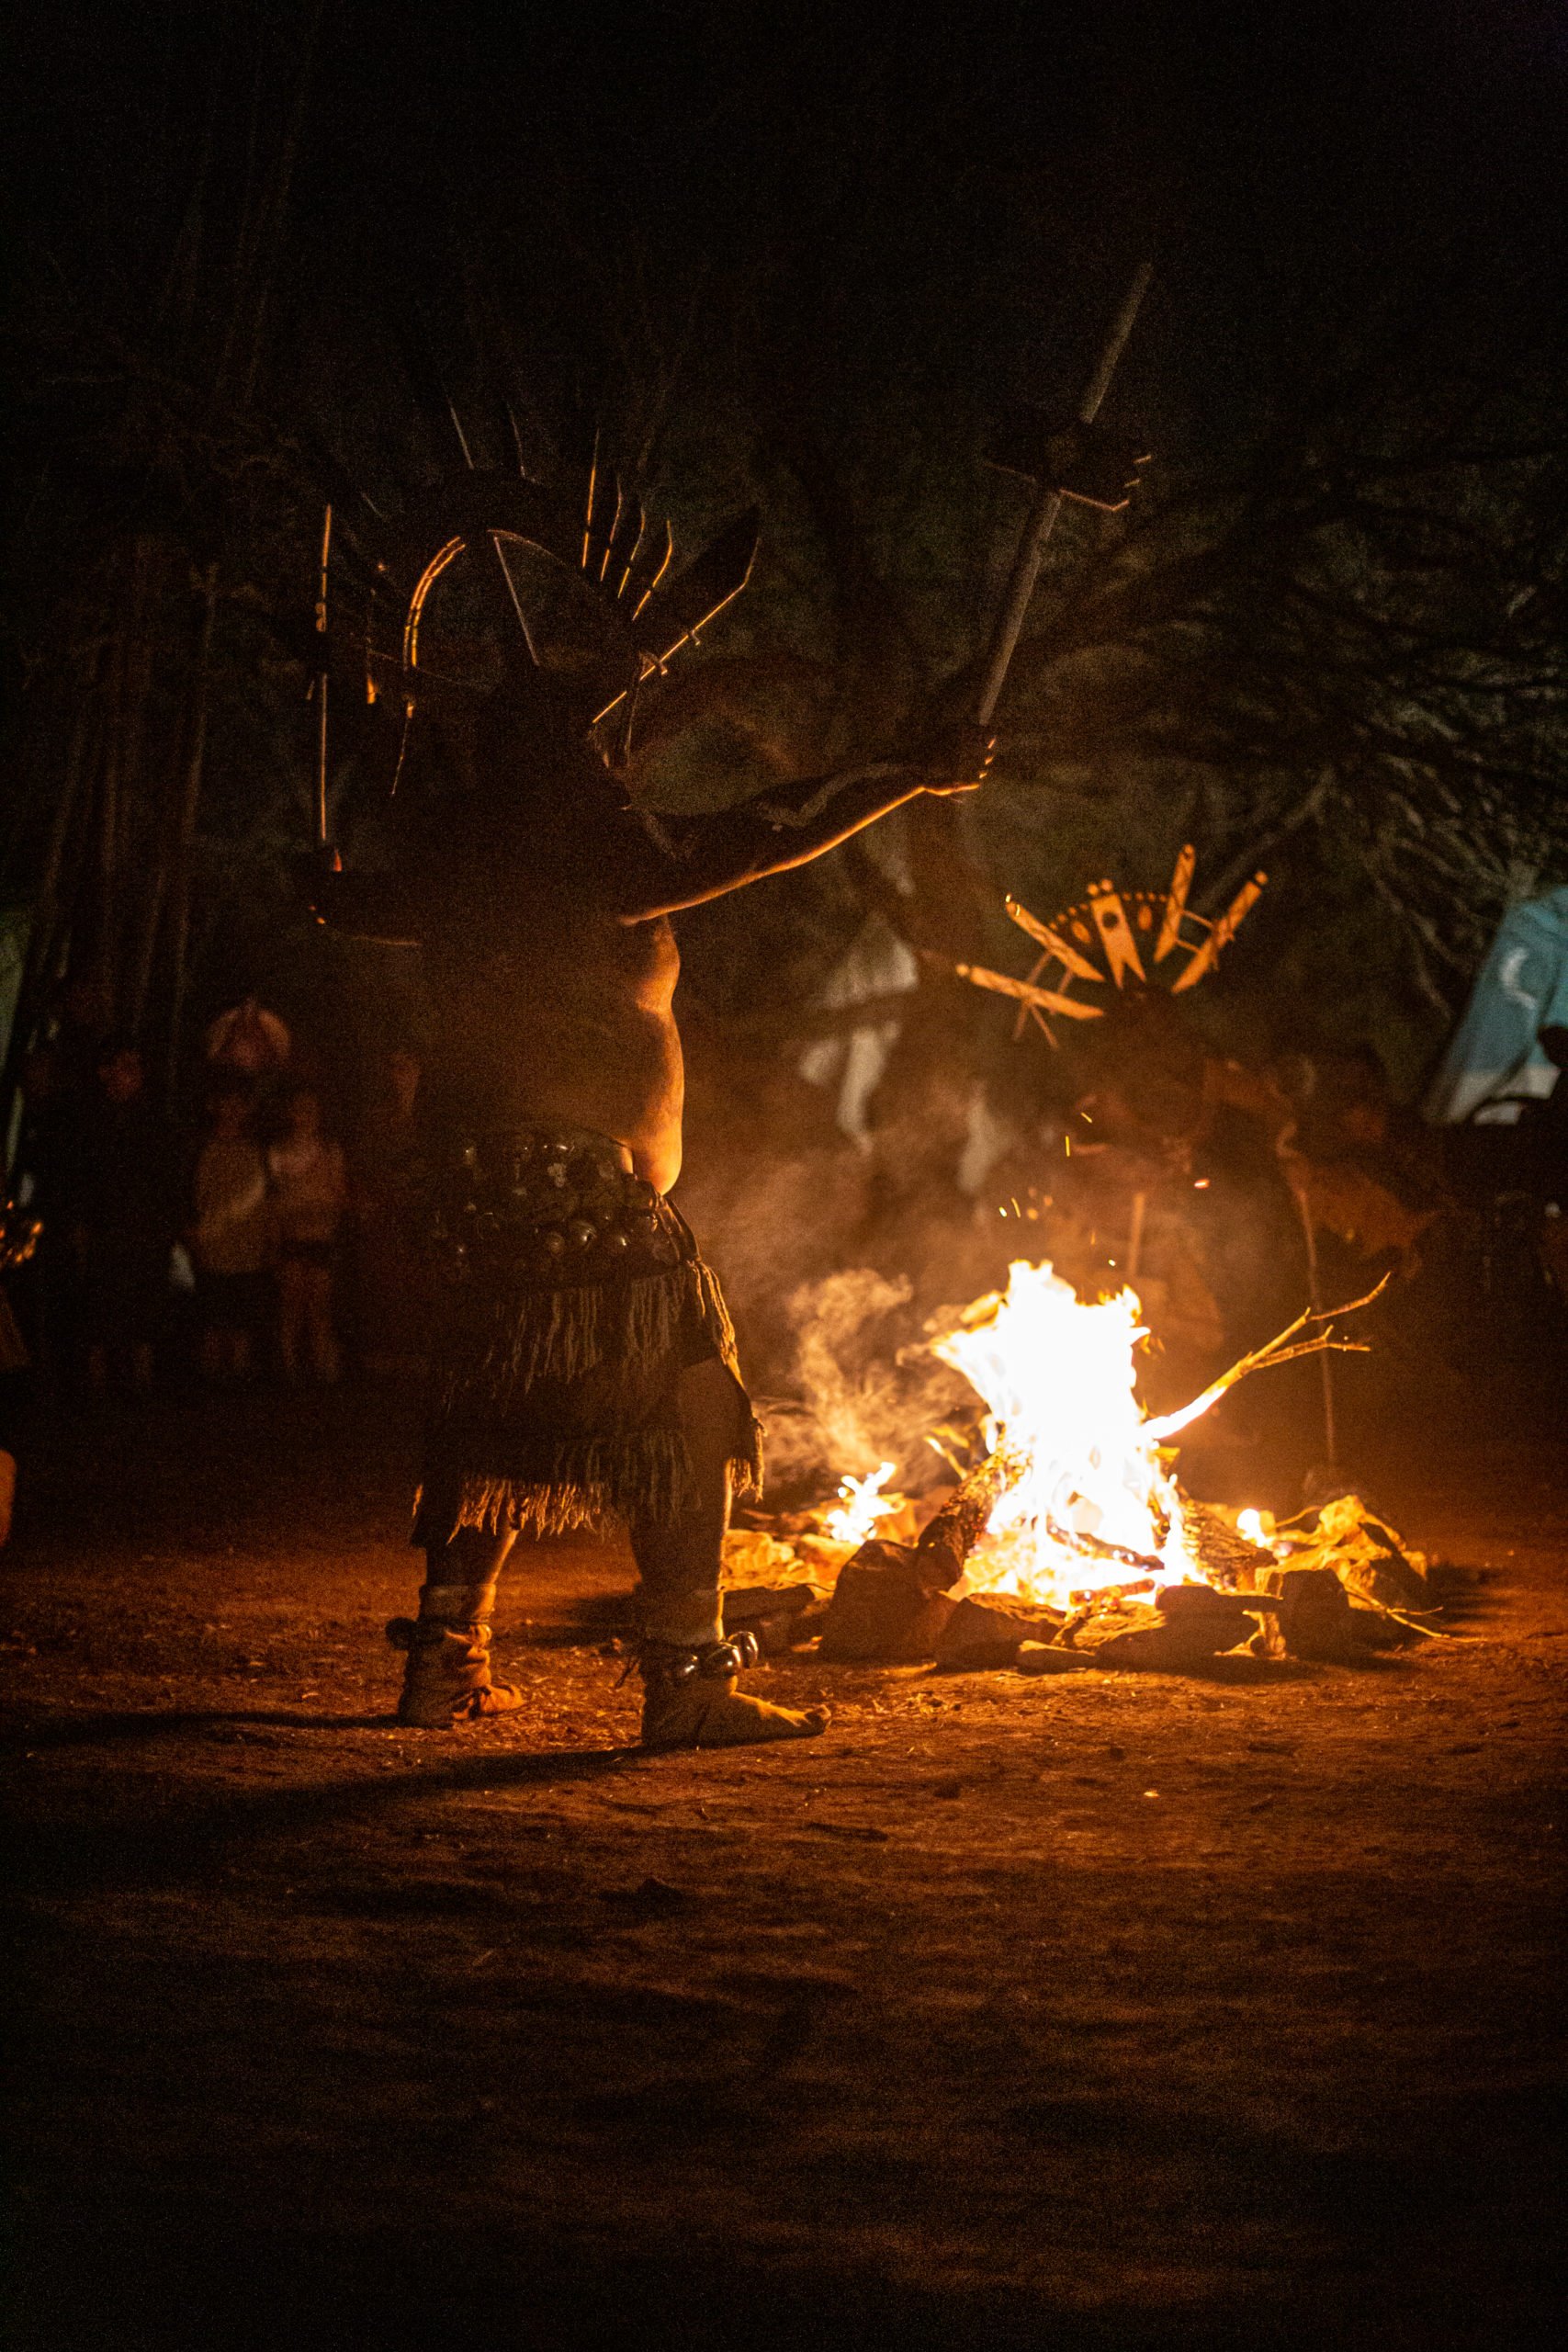 A man in Native American regalia dances in front of a fire.